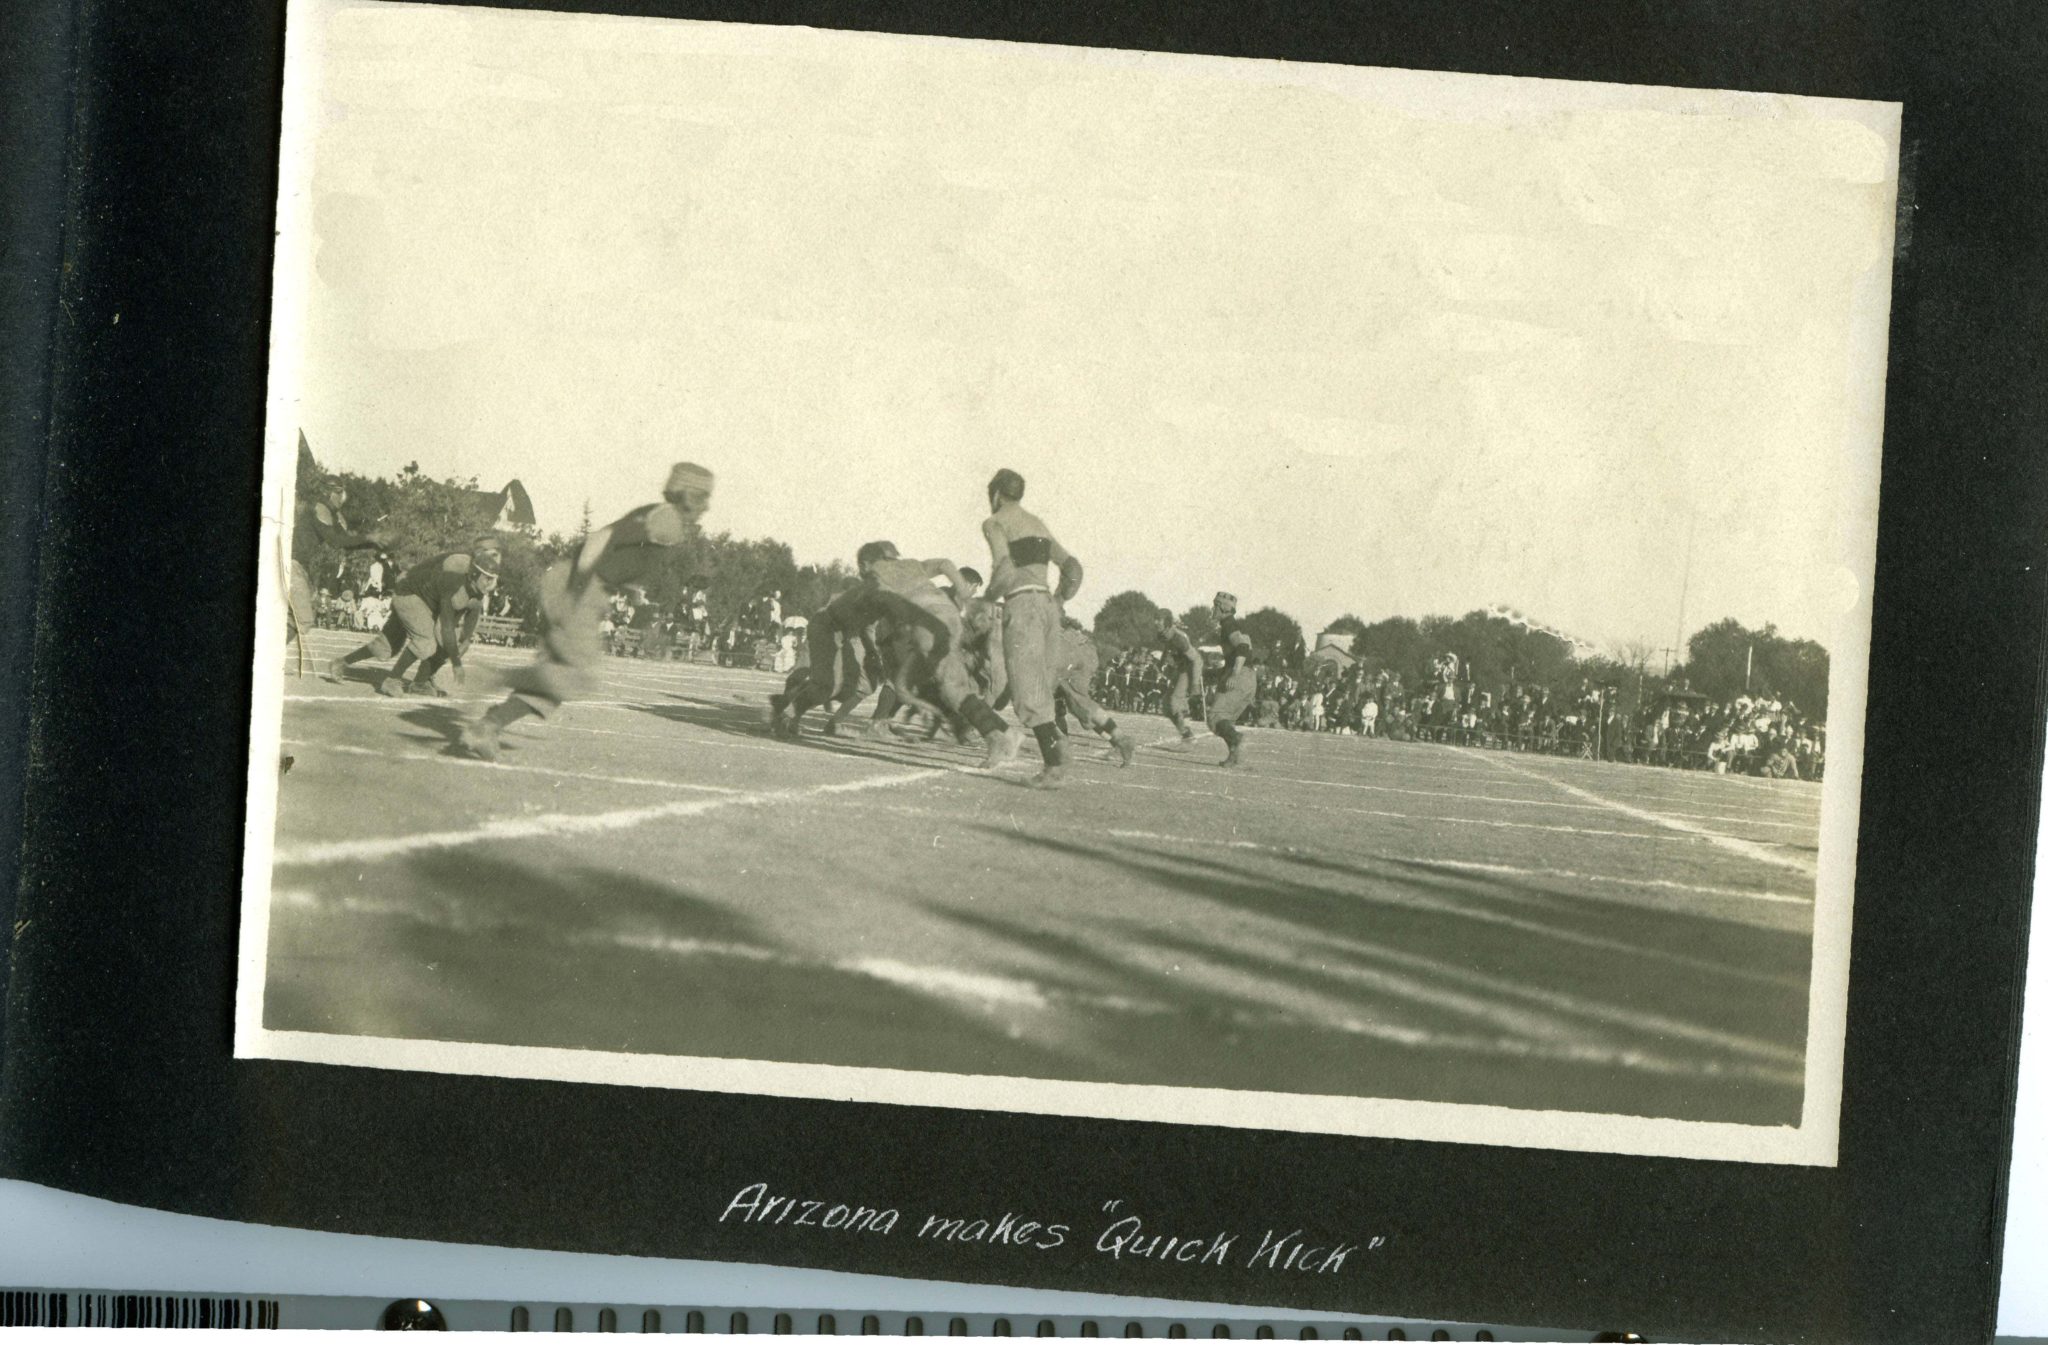 Arizona Makes Quick Kick 1909